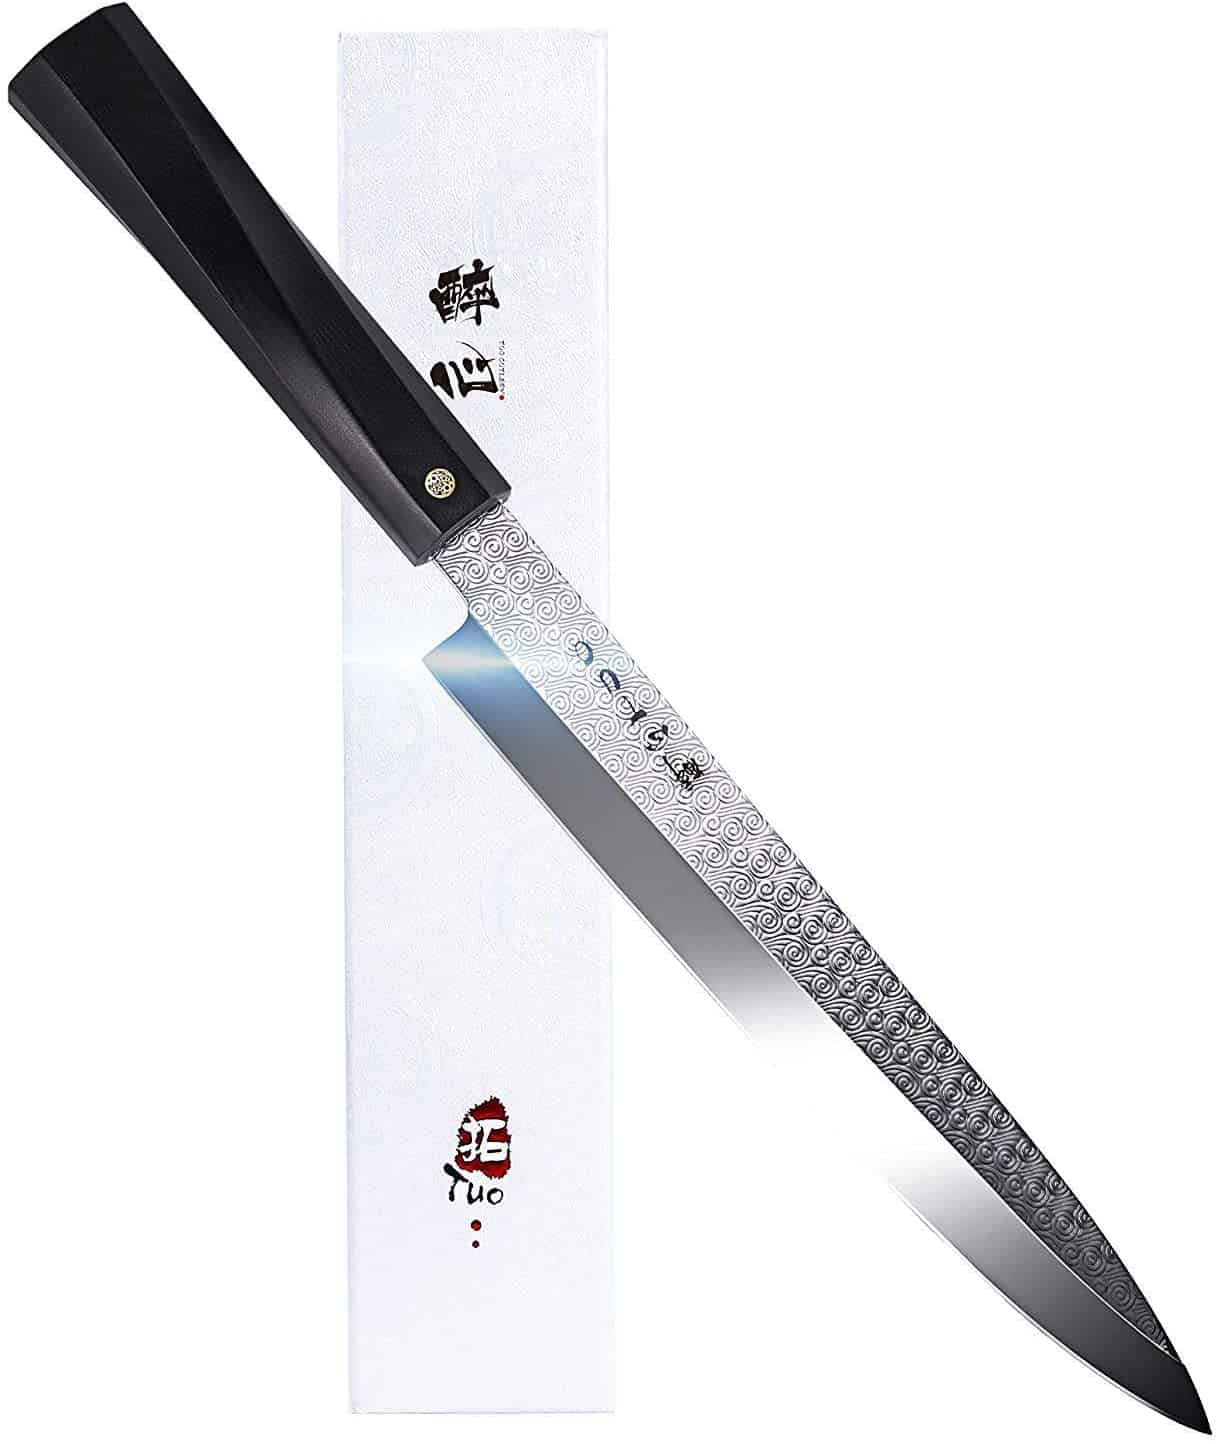 Best yanagiba knife for beginners- TUO Sashimi Sushi